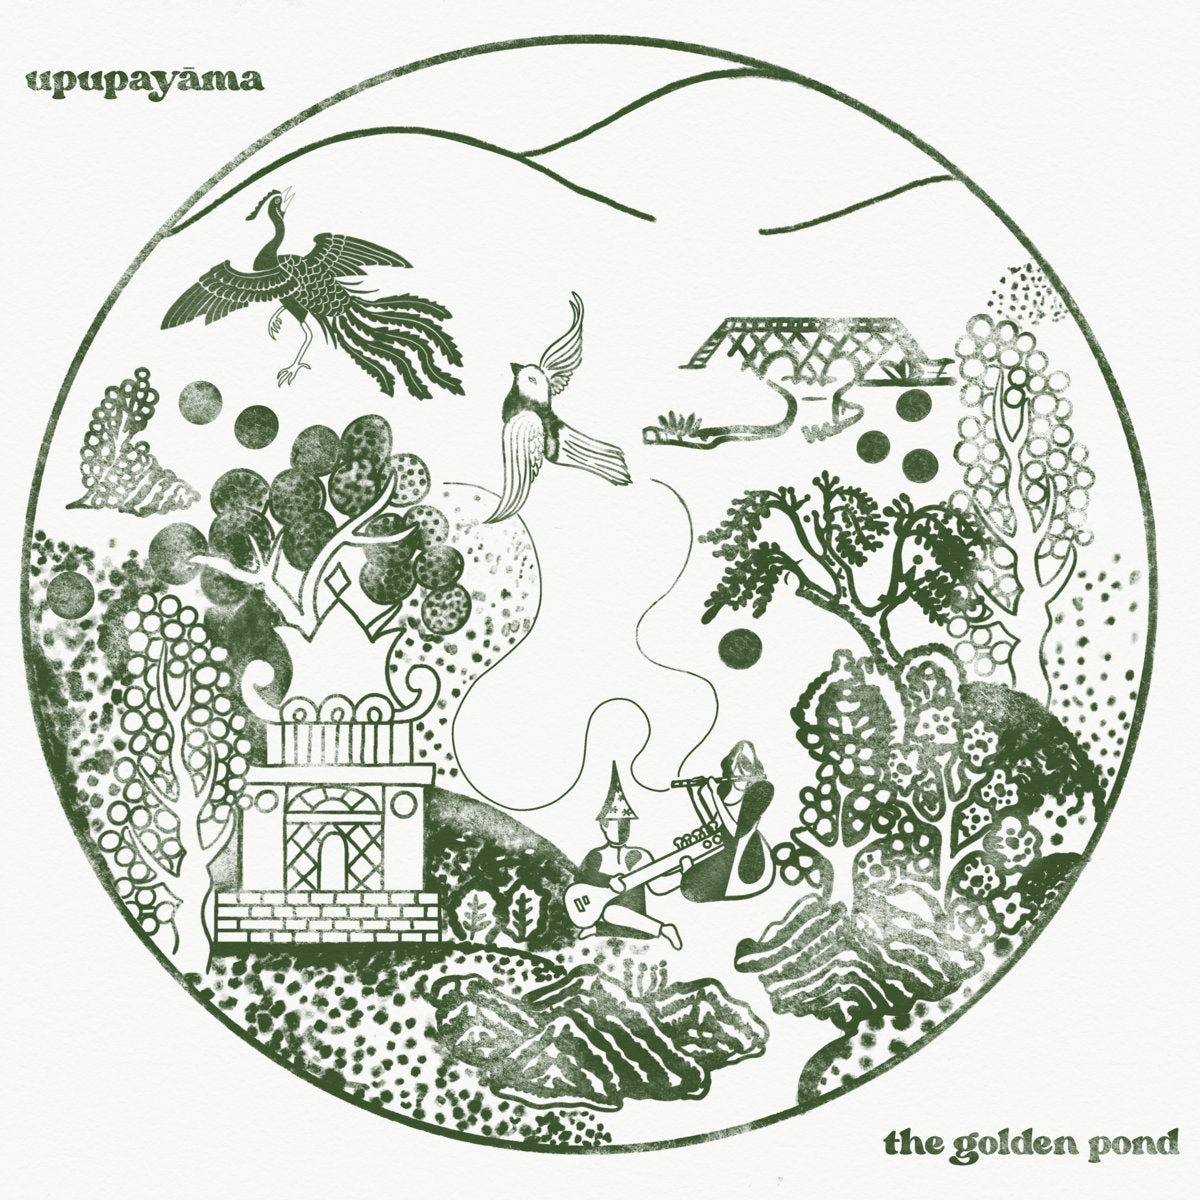 Arcade Sound - Upupayama - The Golden Pond - LP image